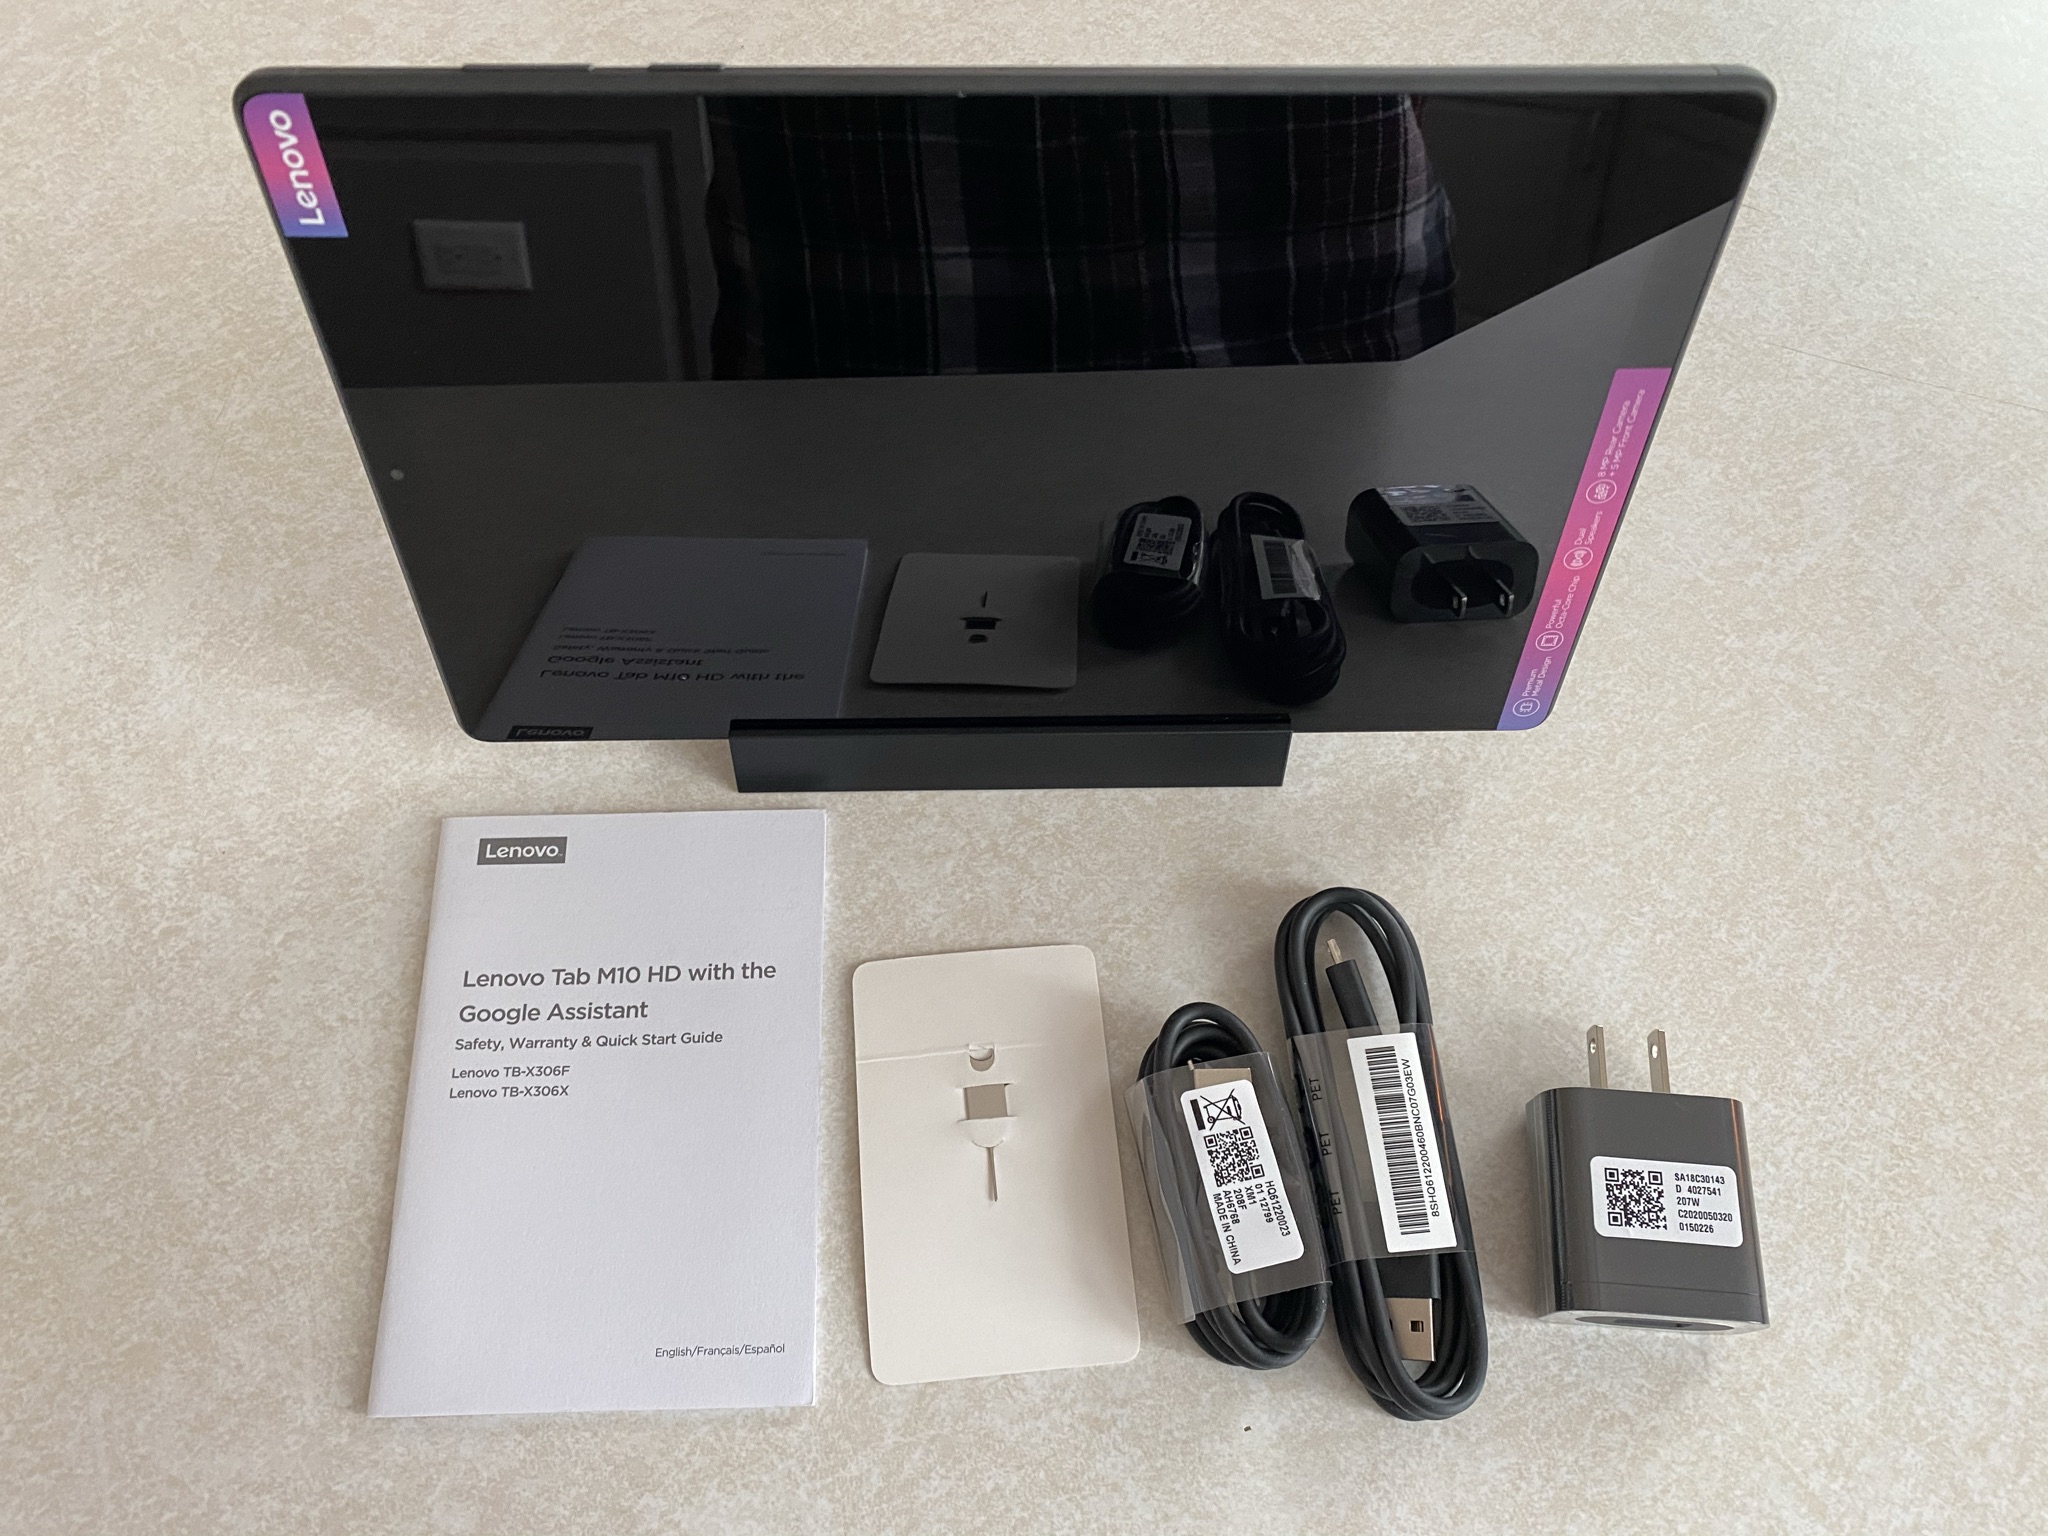 Lenovo Smart Tab M10 HD (2nd Gen) review